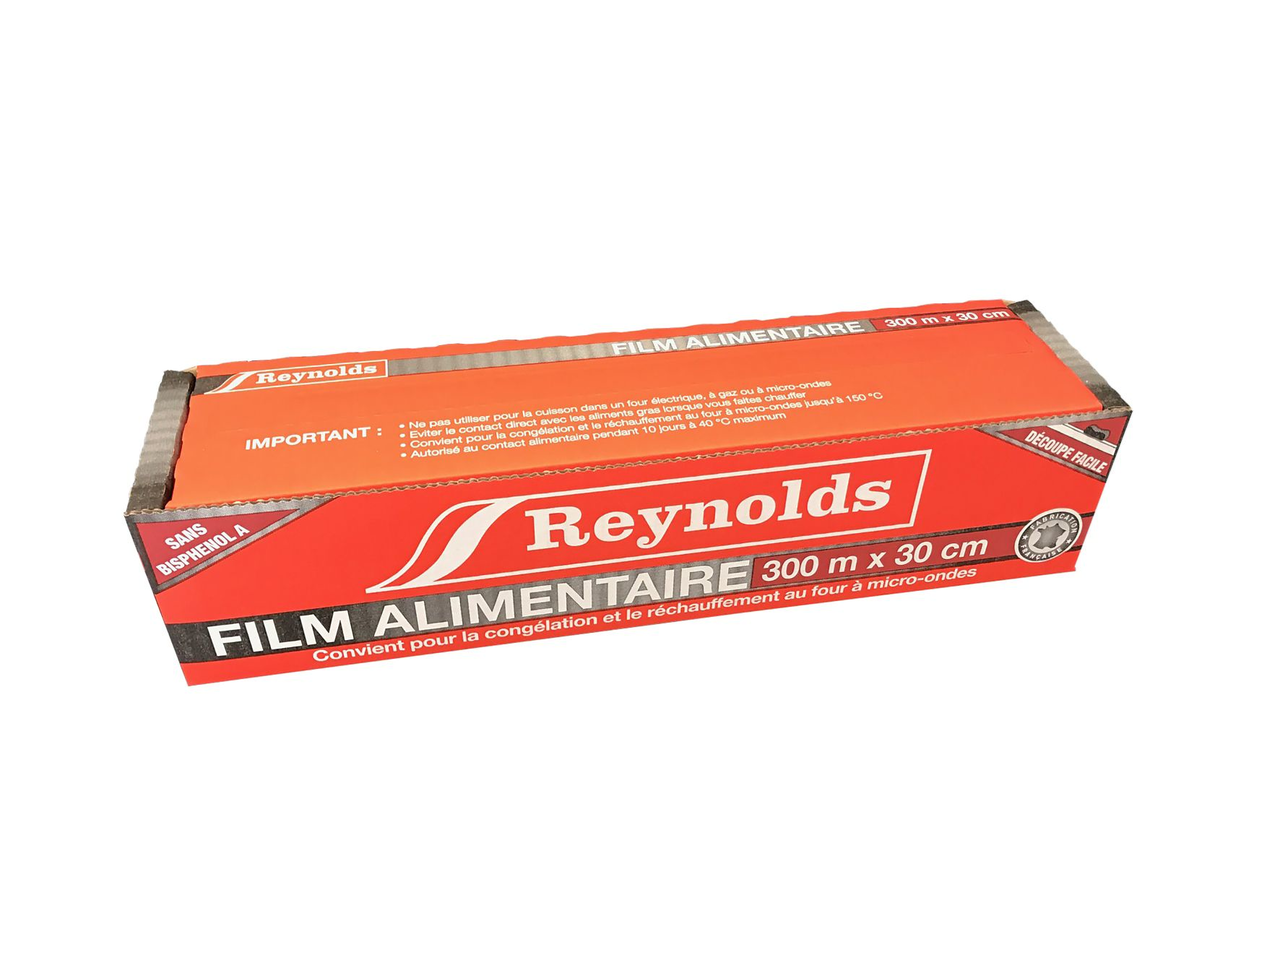 Reynolds Film alimentaire 300 m x 30 cm